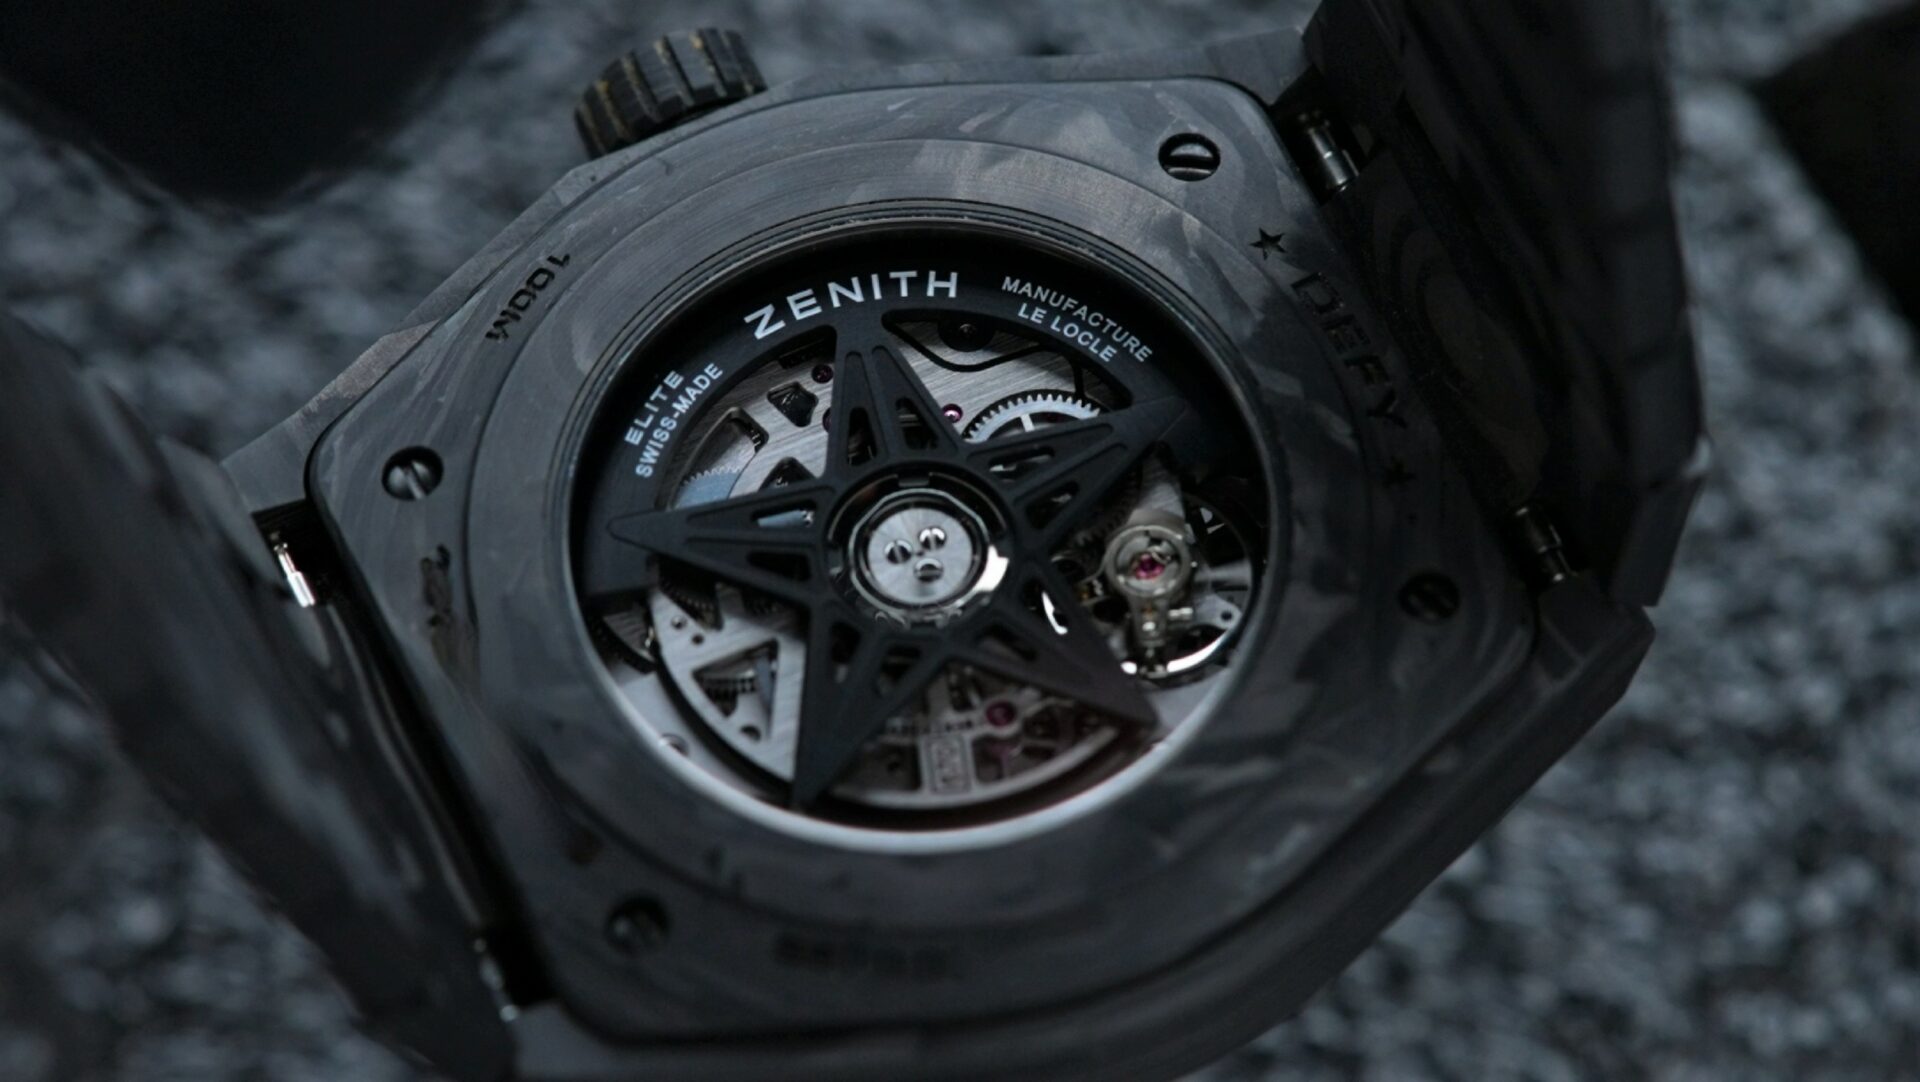 Open caseback on the Zenith Defy Classic Carbon Fiber watch.